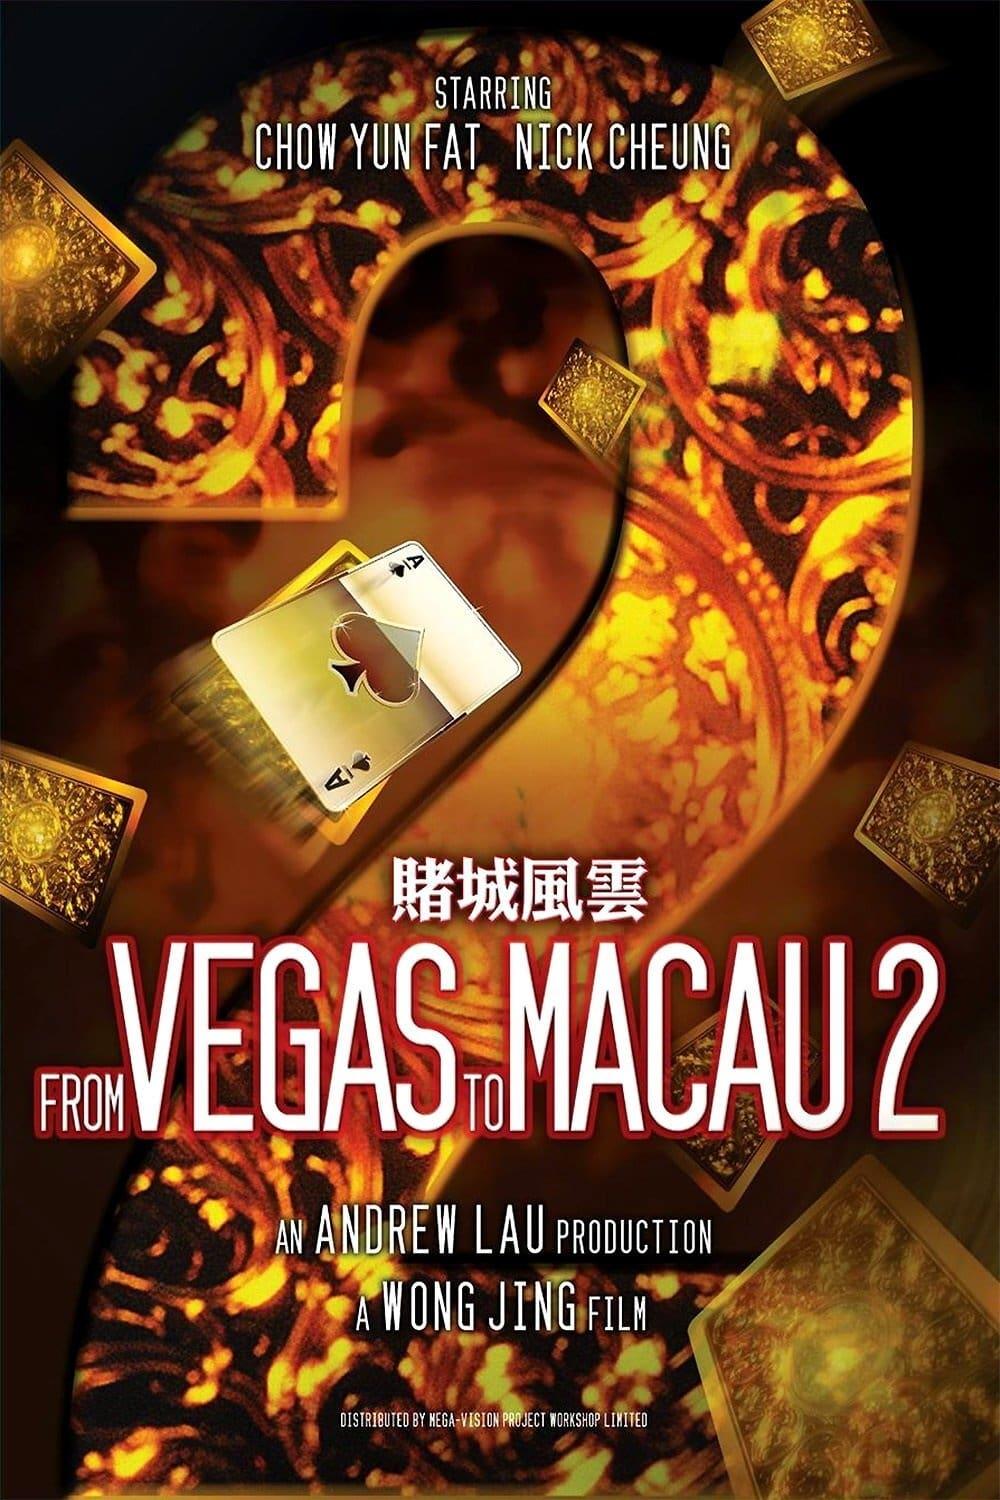 From Vegas to Macau II poster